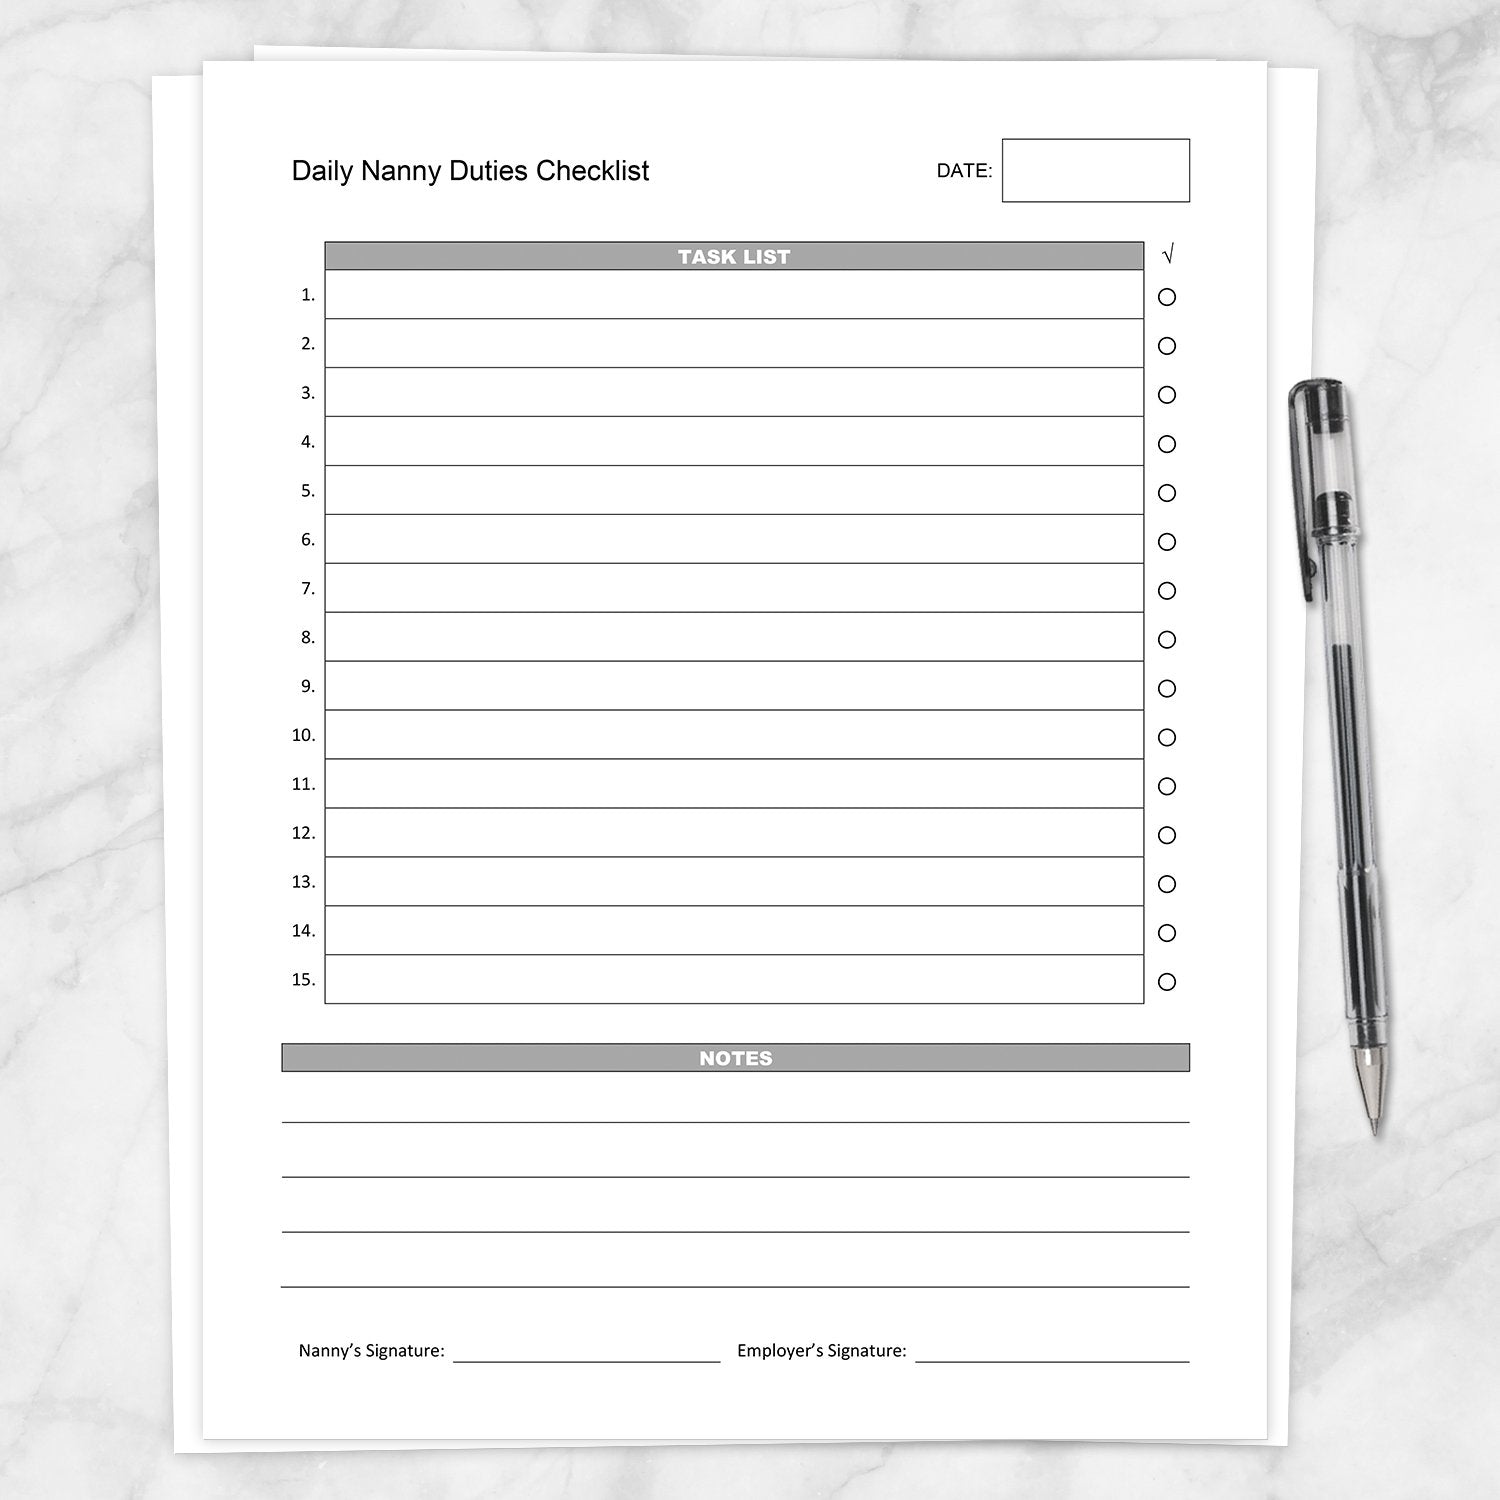 Printable Daily Nanny Duties Checklist Sheet at Printable Planning